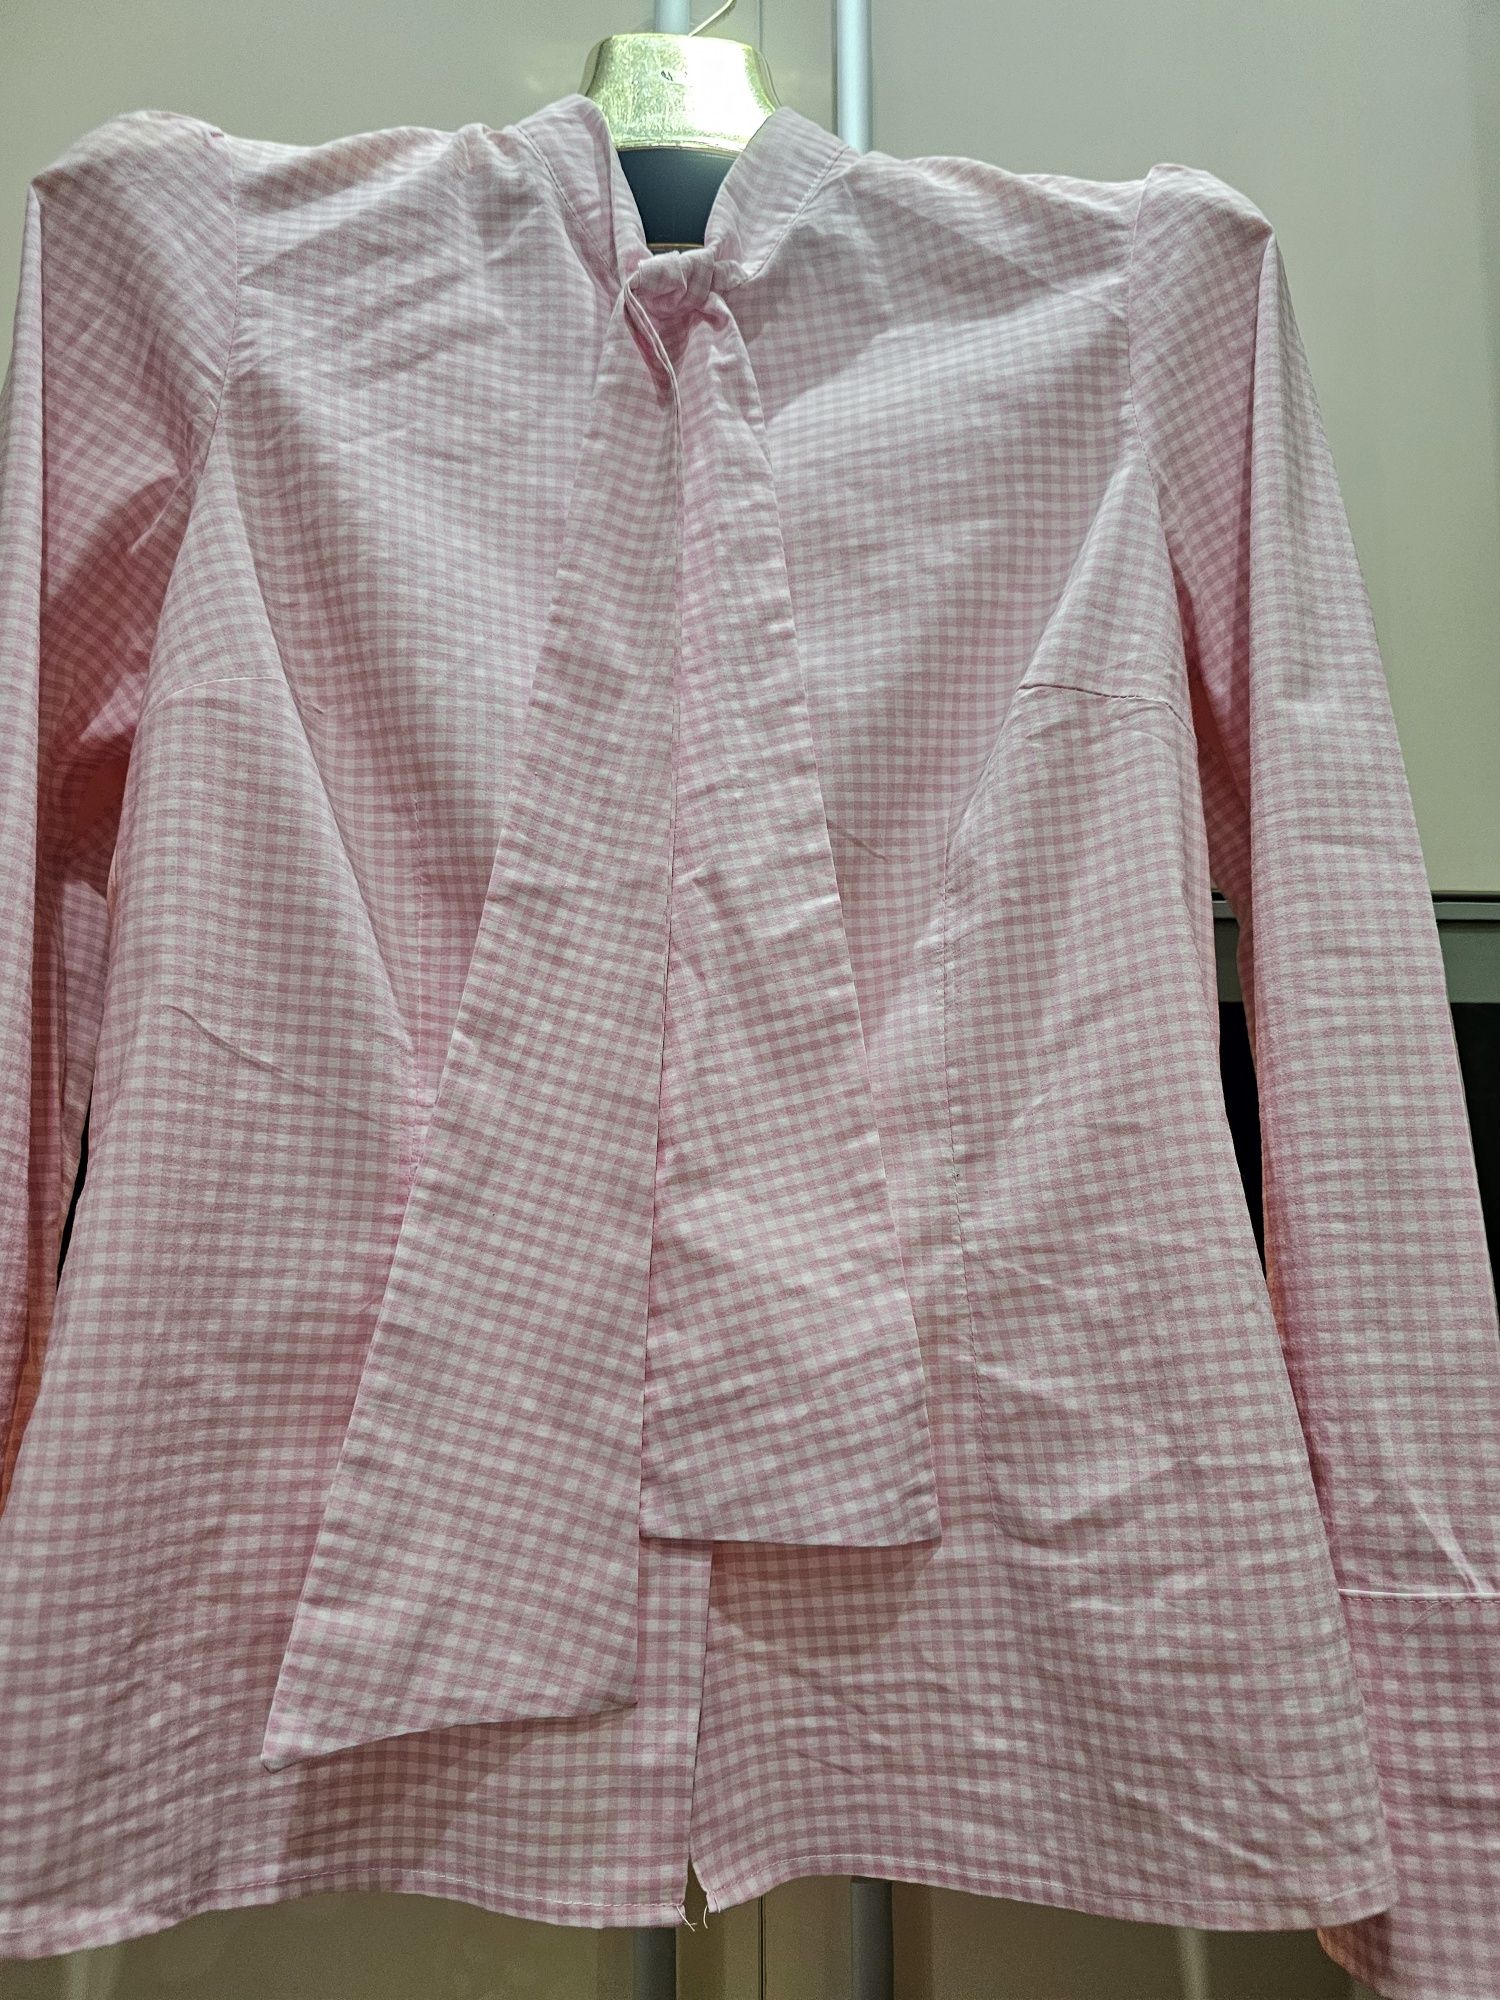 Bluza alba Urma si camasa roz cu funda